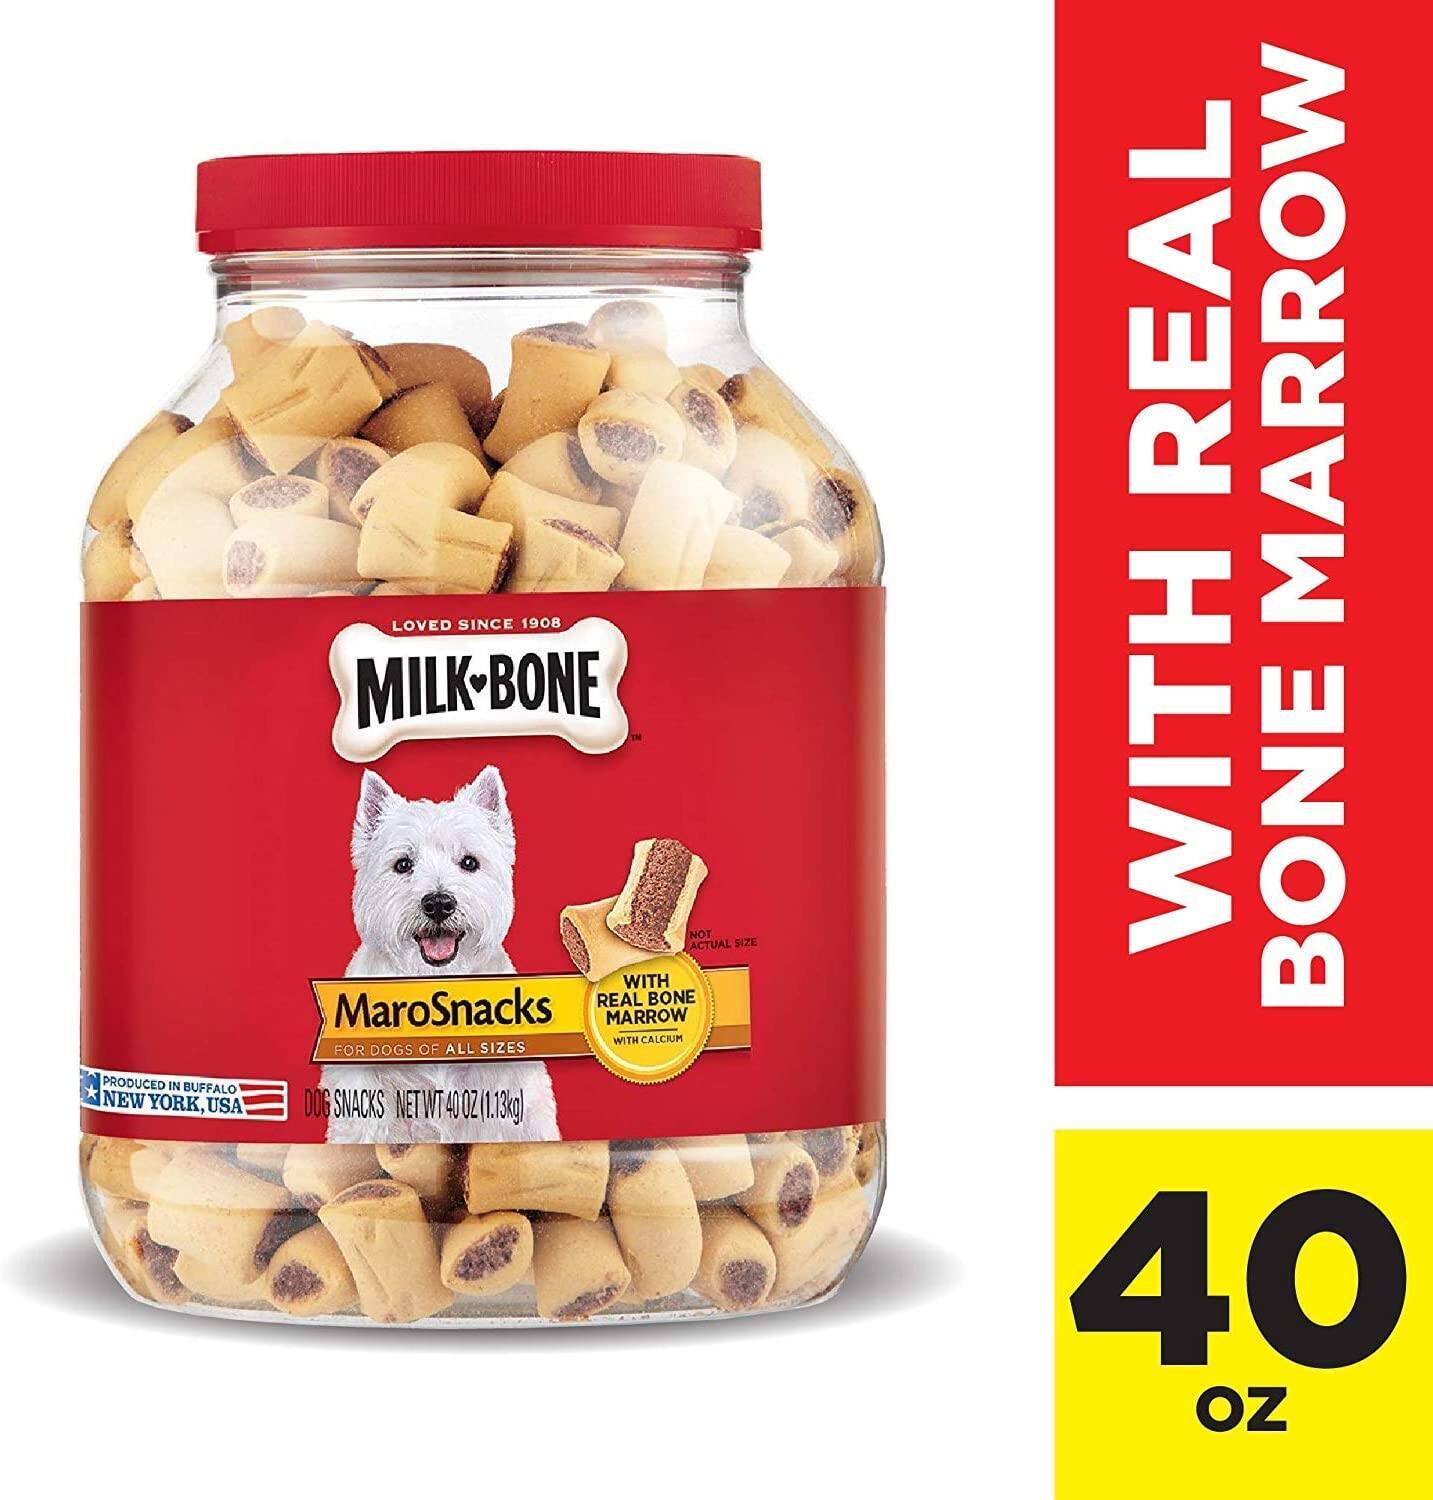 40-Oz. Milk-Bone MaroSnacks Dog Treats w/ Real Bone Marrow & Calcium $6.55 w/ Subscribe & Save